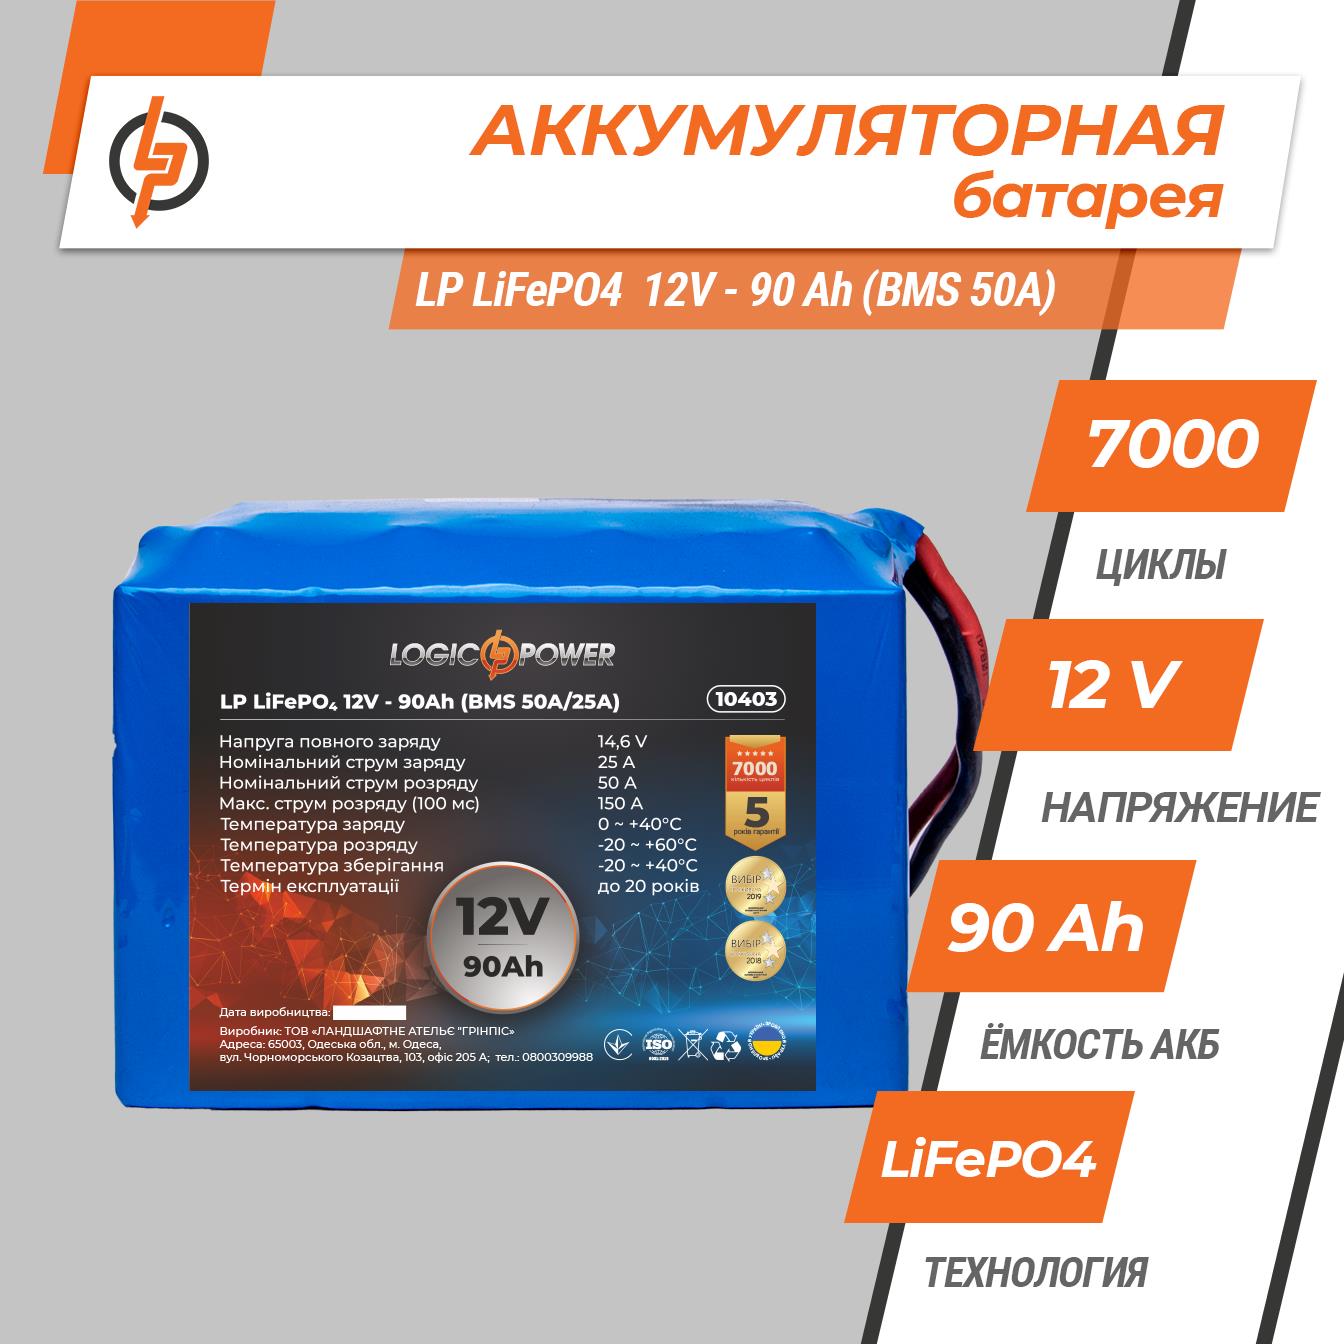 Аккумулятор литий-железо-фосфатный LogicPower LP LiFePO4 12V - 90 Ah (BMS 50A/25A) (10403) цена 0.00 грн - фотография 2